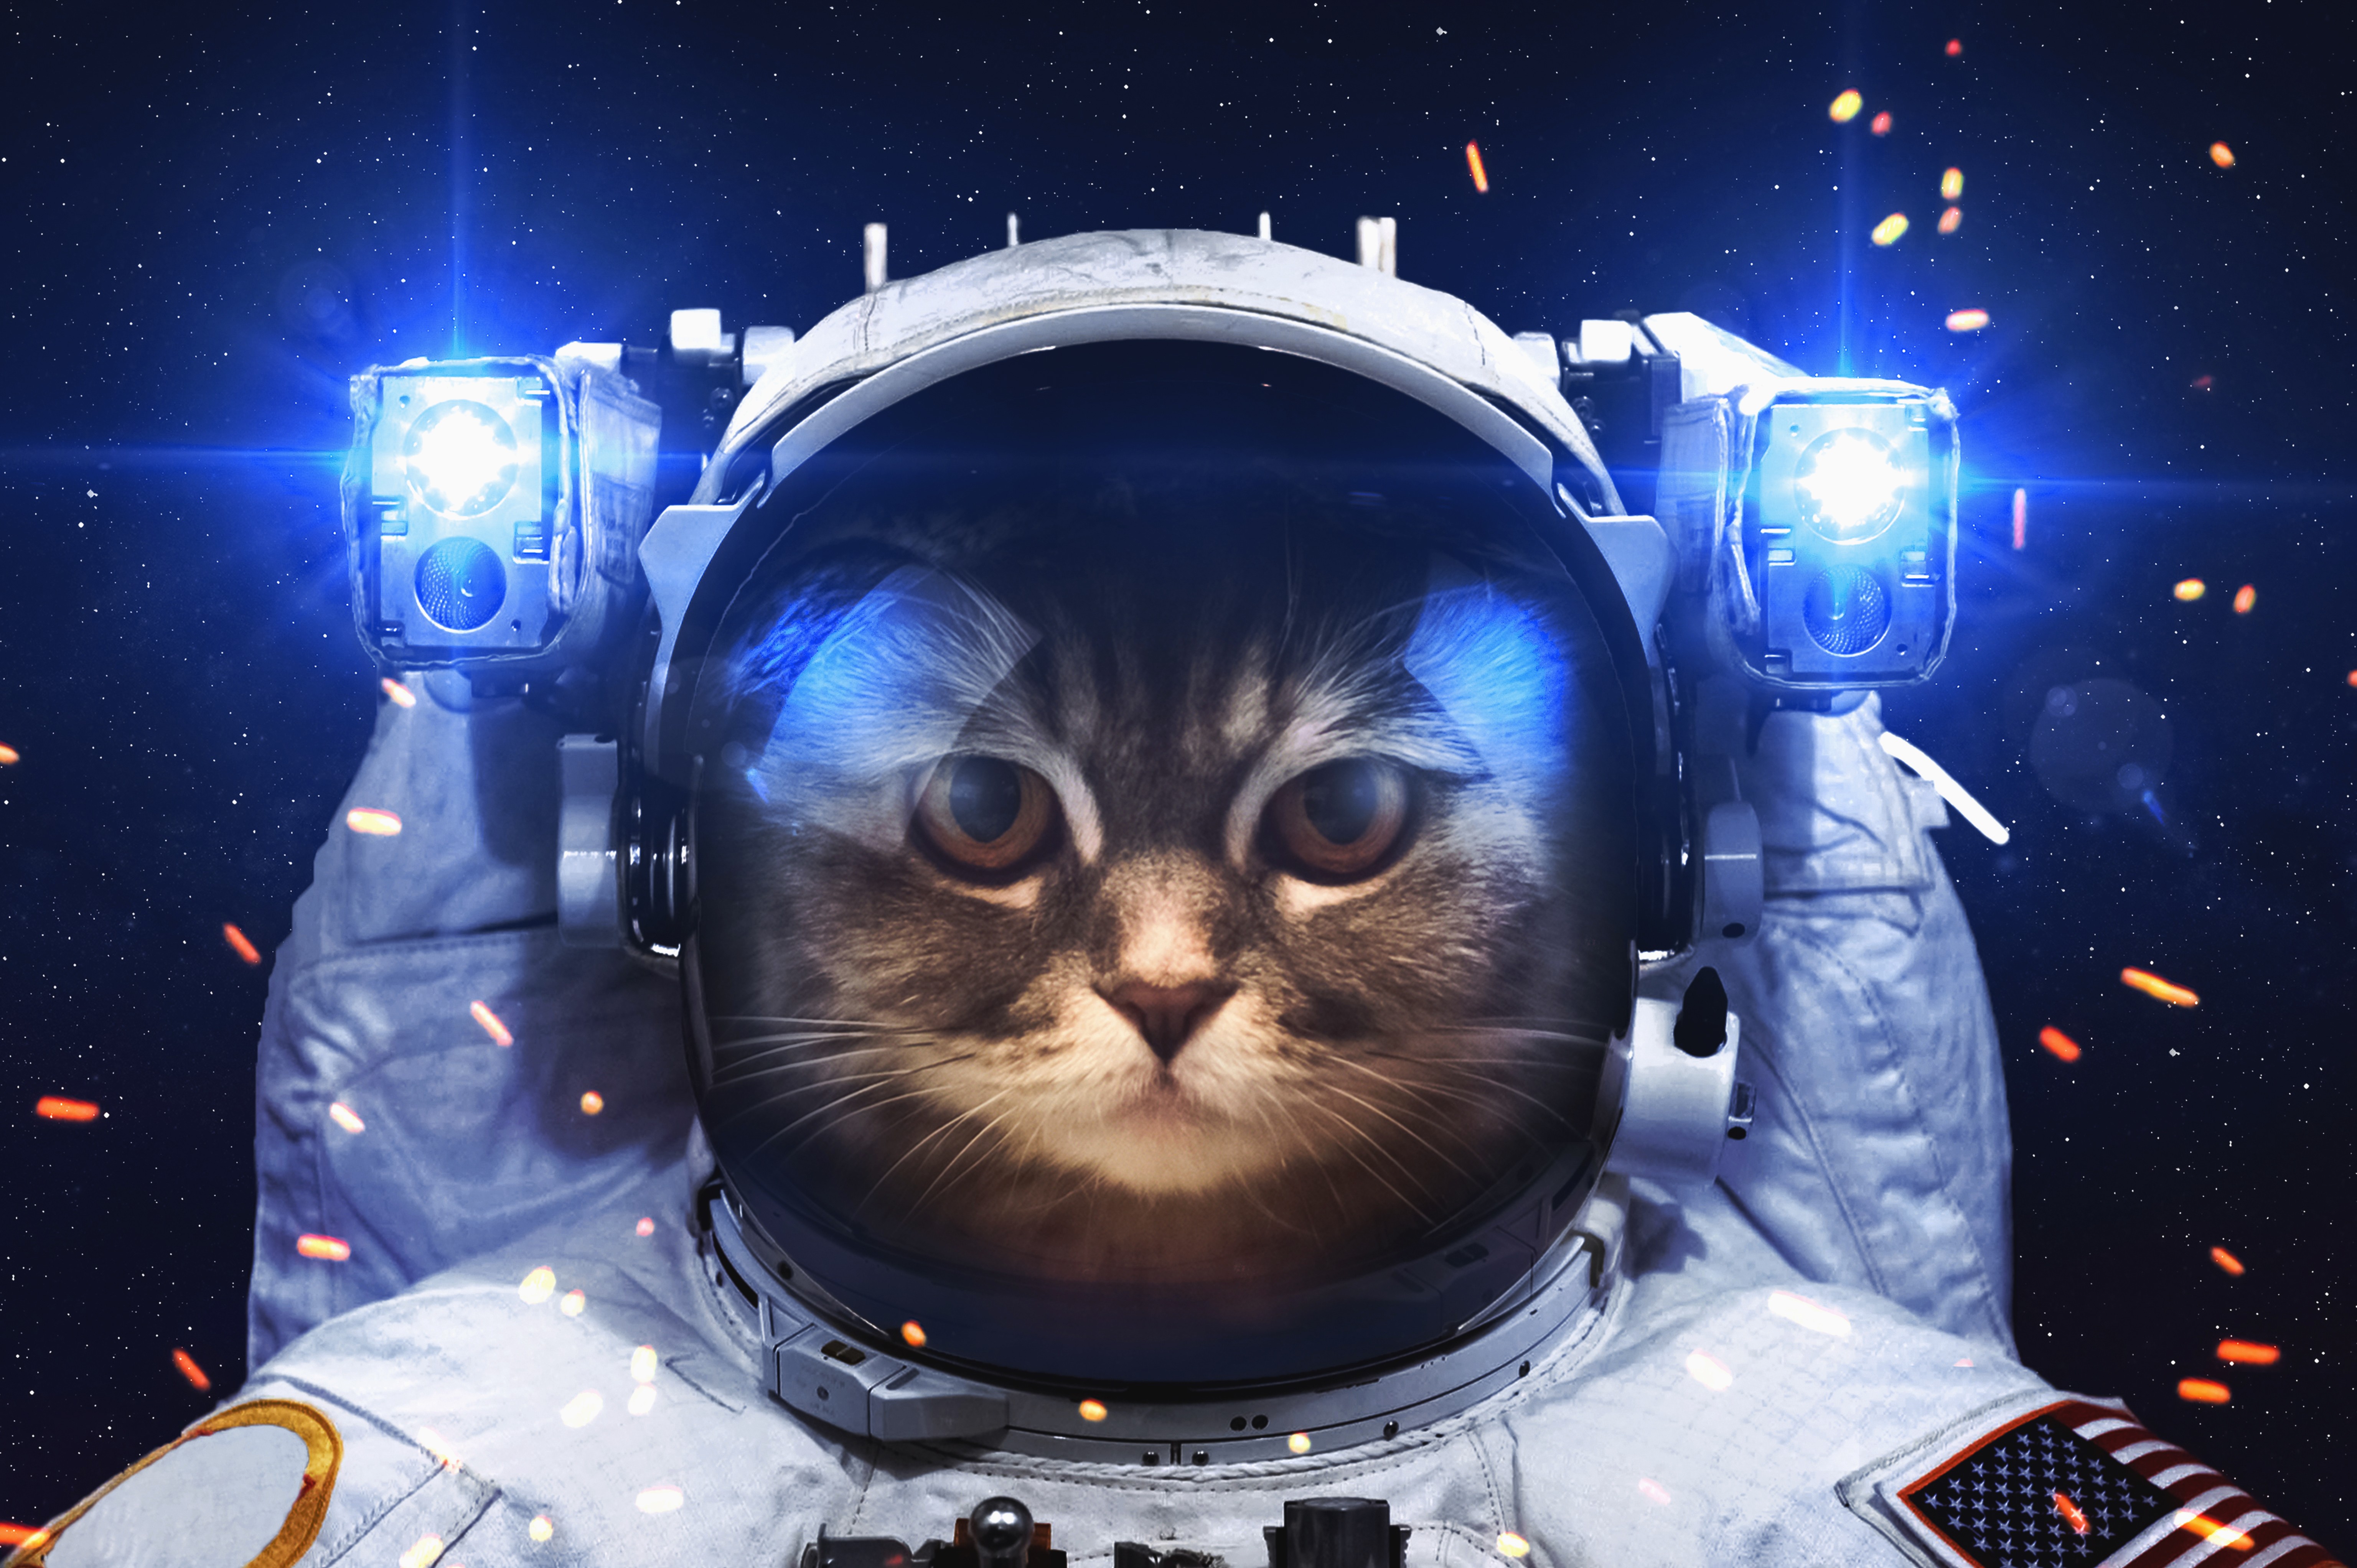 General 6144x4088 astronaut cats space digital art closeup space art